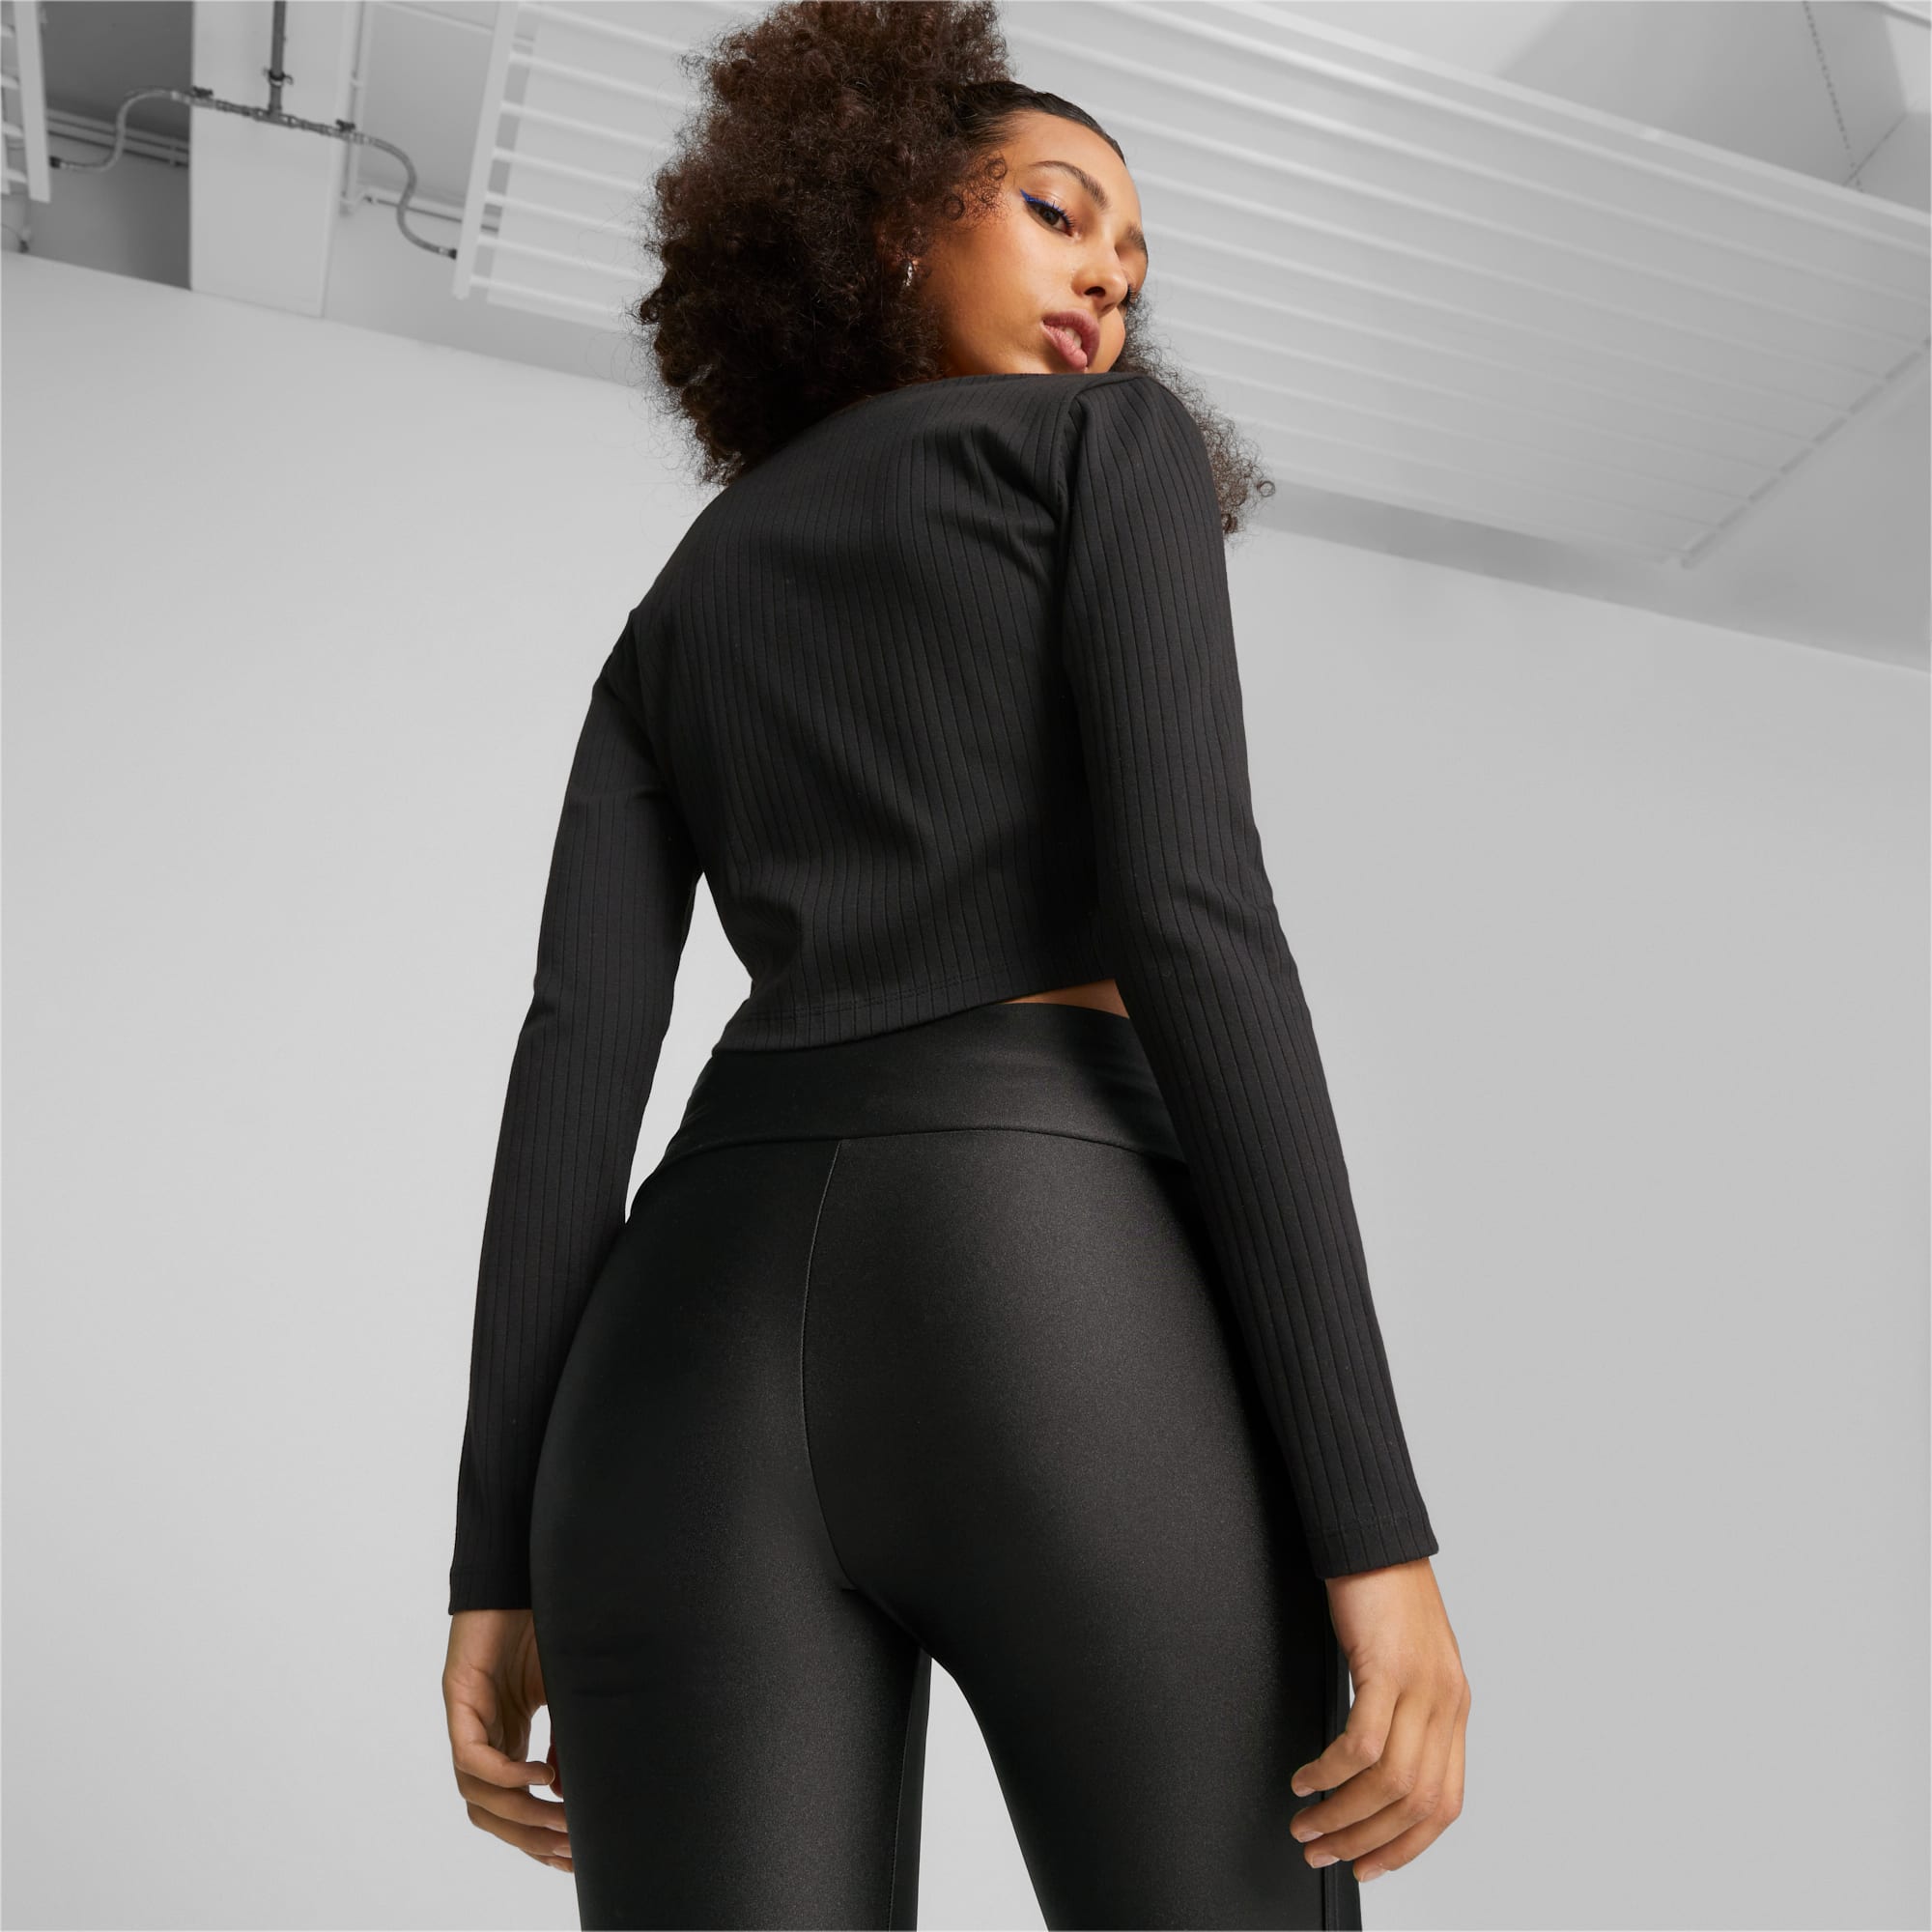 PUMA Classics Women's Ribbed Long Sleeve Shirt, Black, Size XXL, Clothing